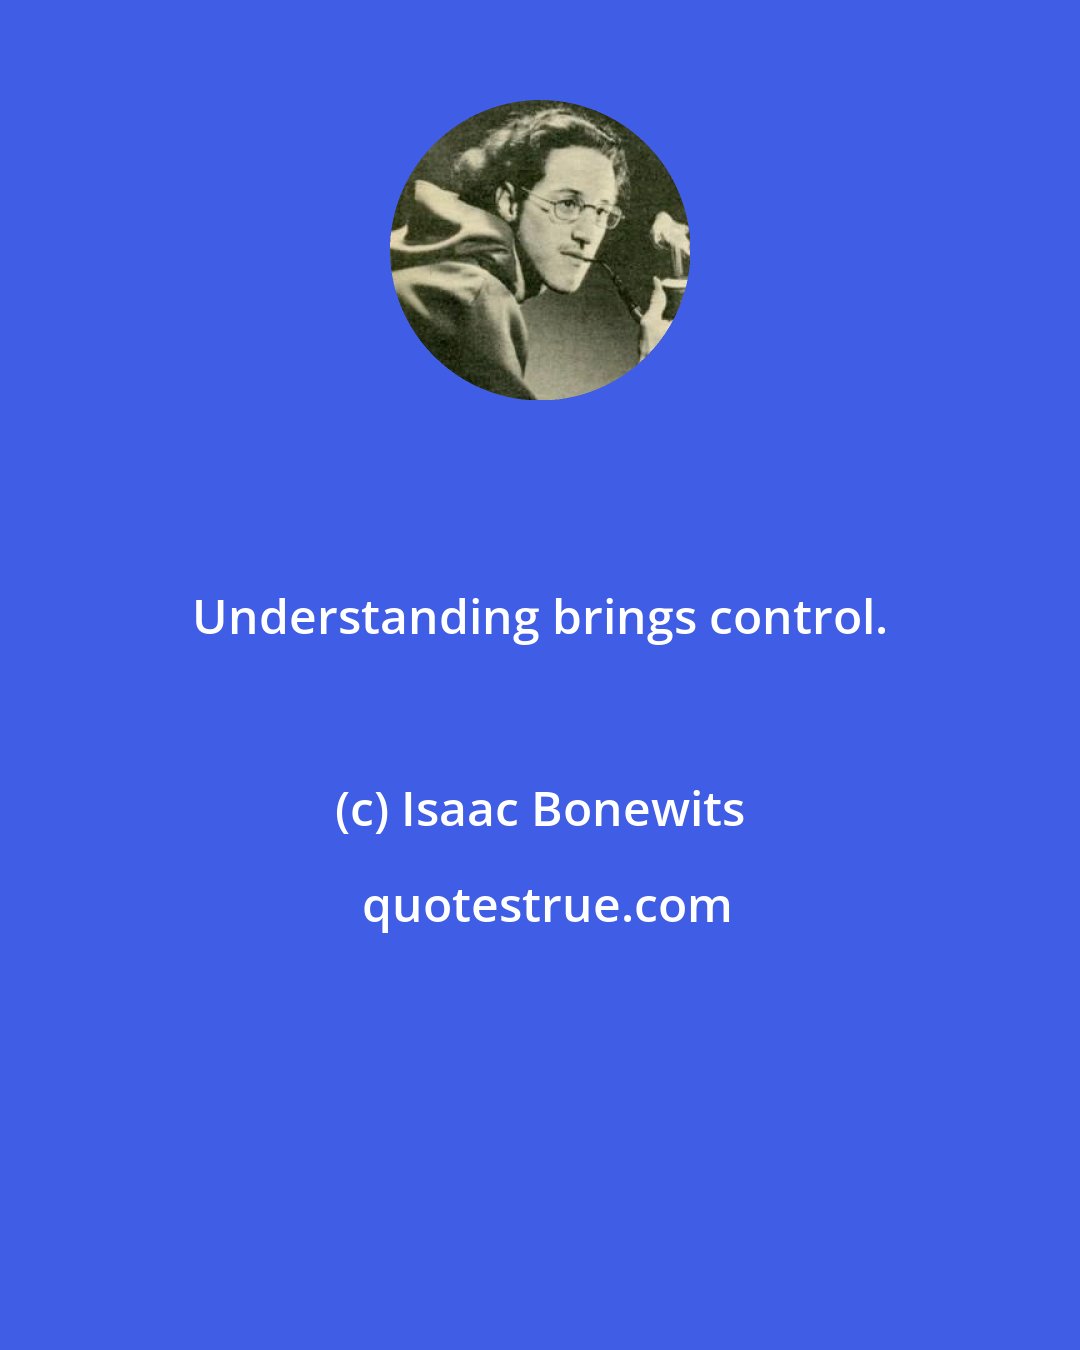 Isaac Bonewits: Understanding brings control.